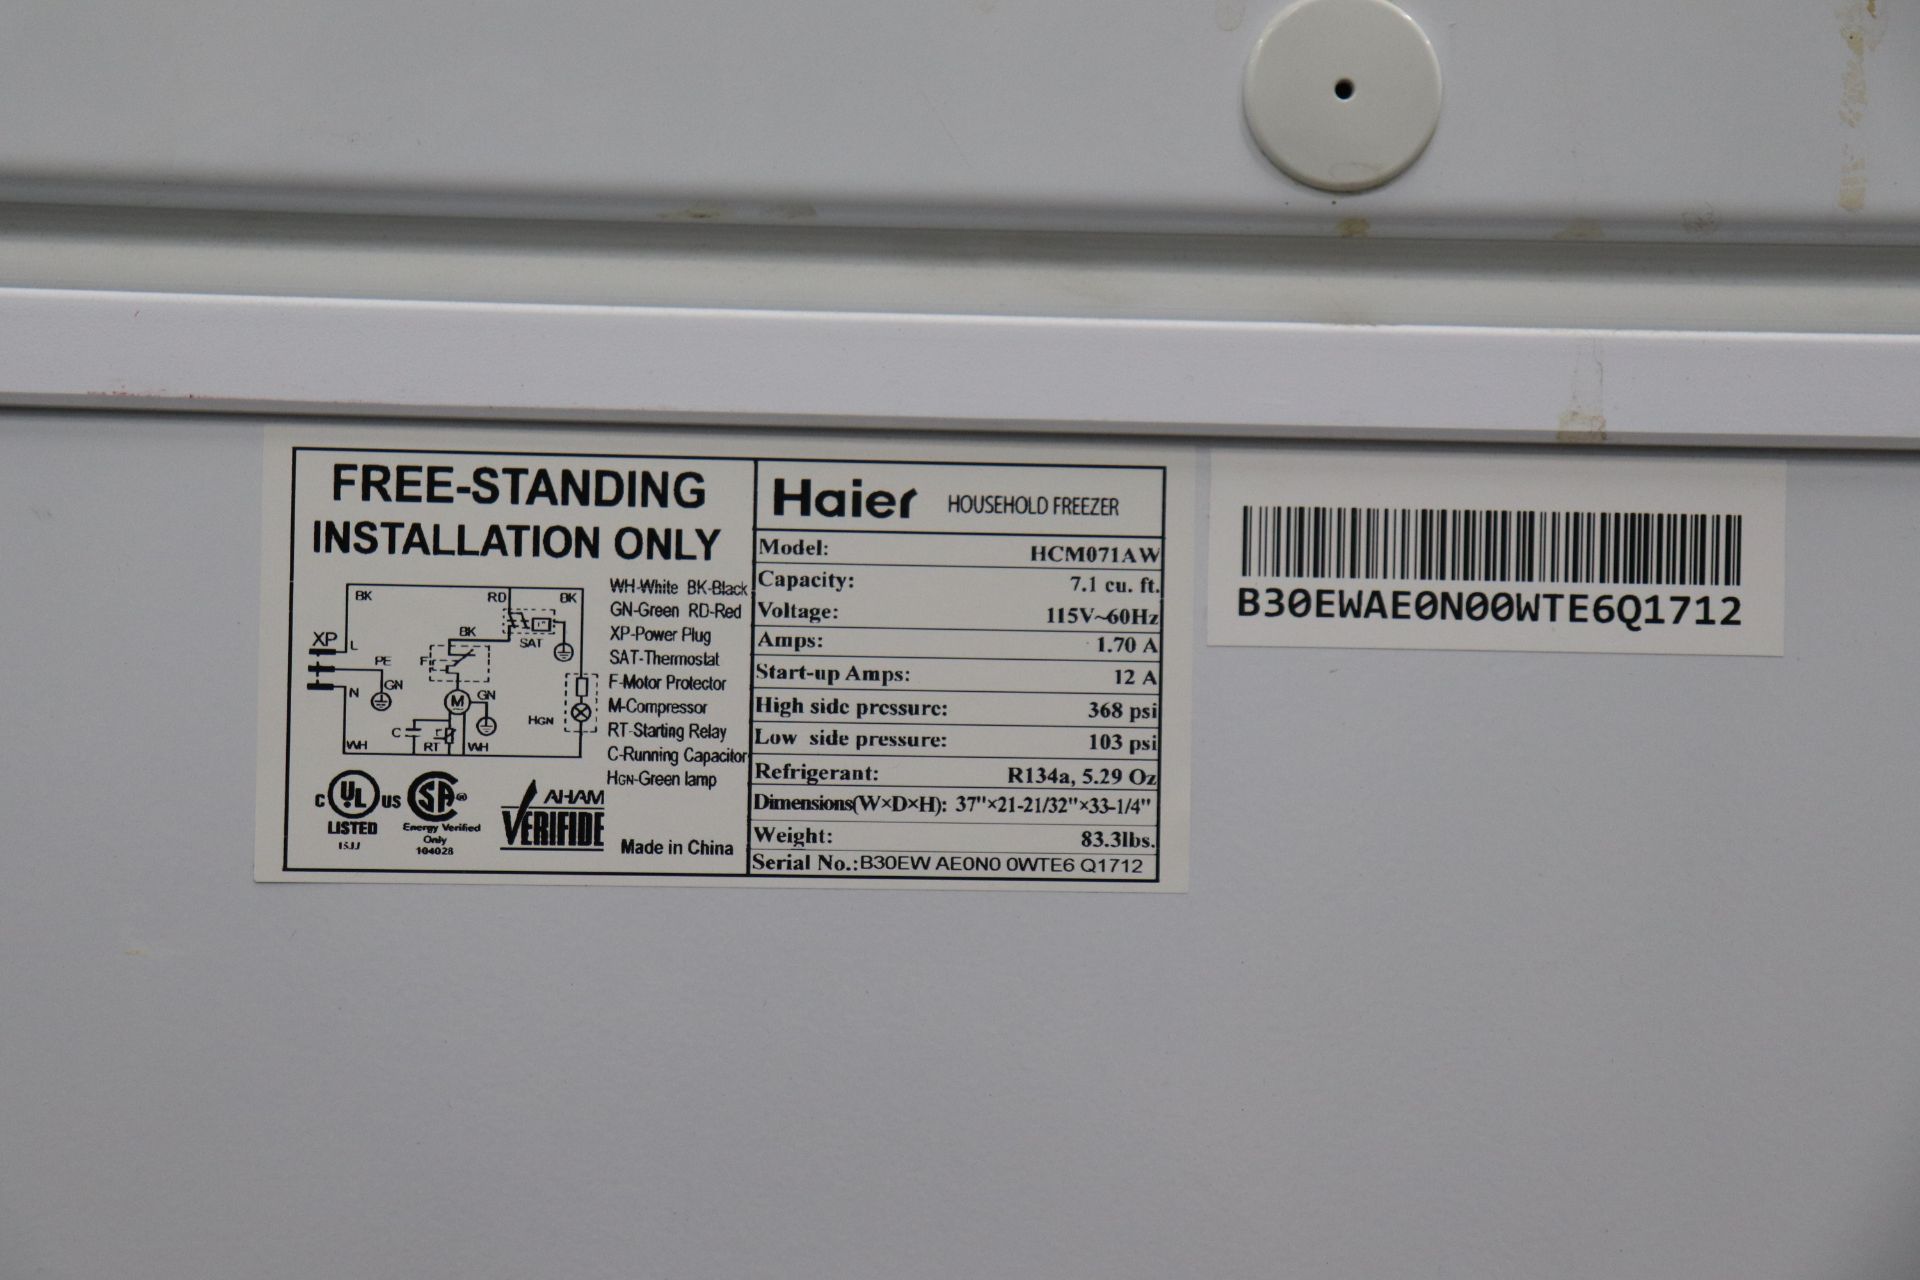 Haier Household Freezer, 7.1 cubit foot capacity, Model HCM071AW, 37" x 22" x 33", Serial #B30EW AE0 - Image 6 of 6